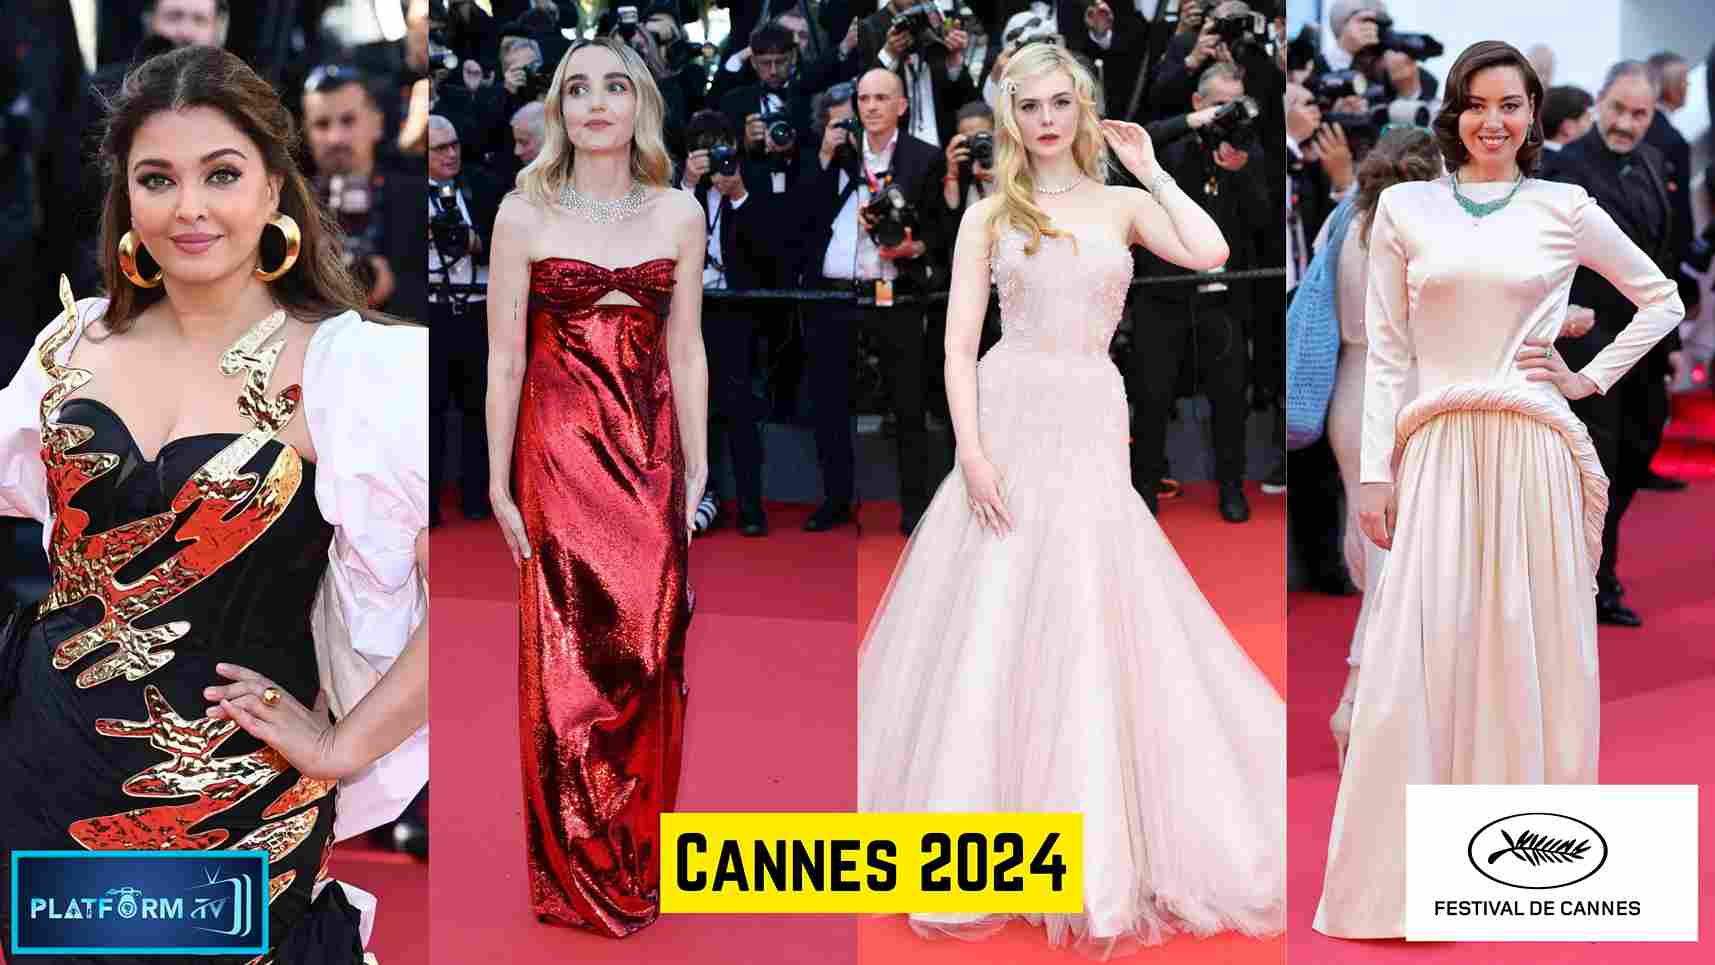 Cannes 2024 - Platform Tamil